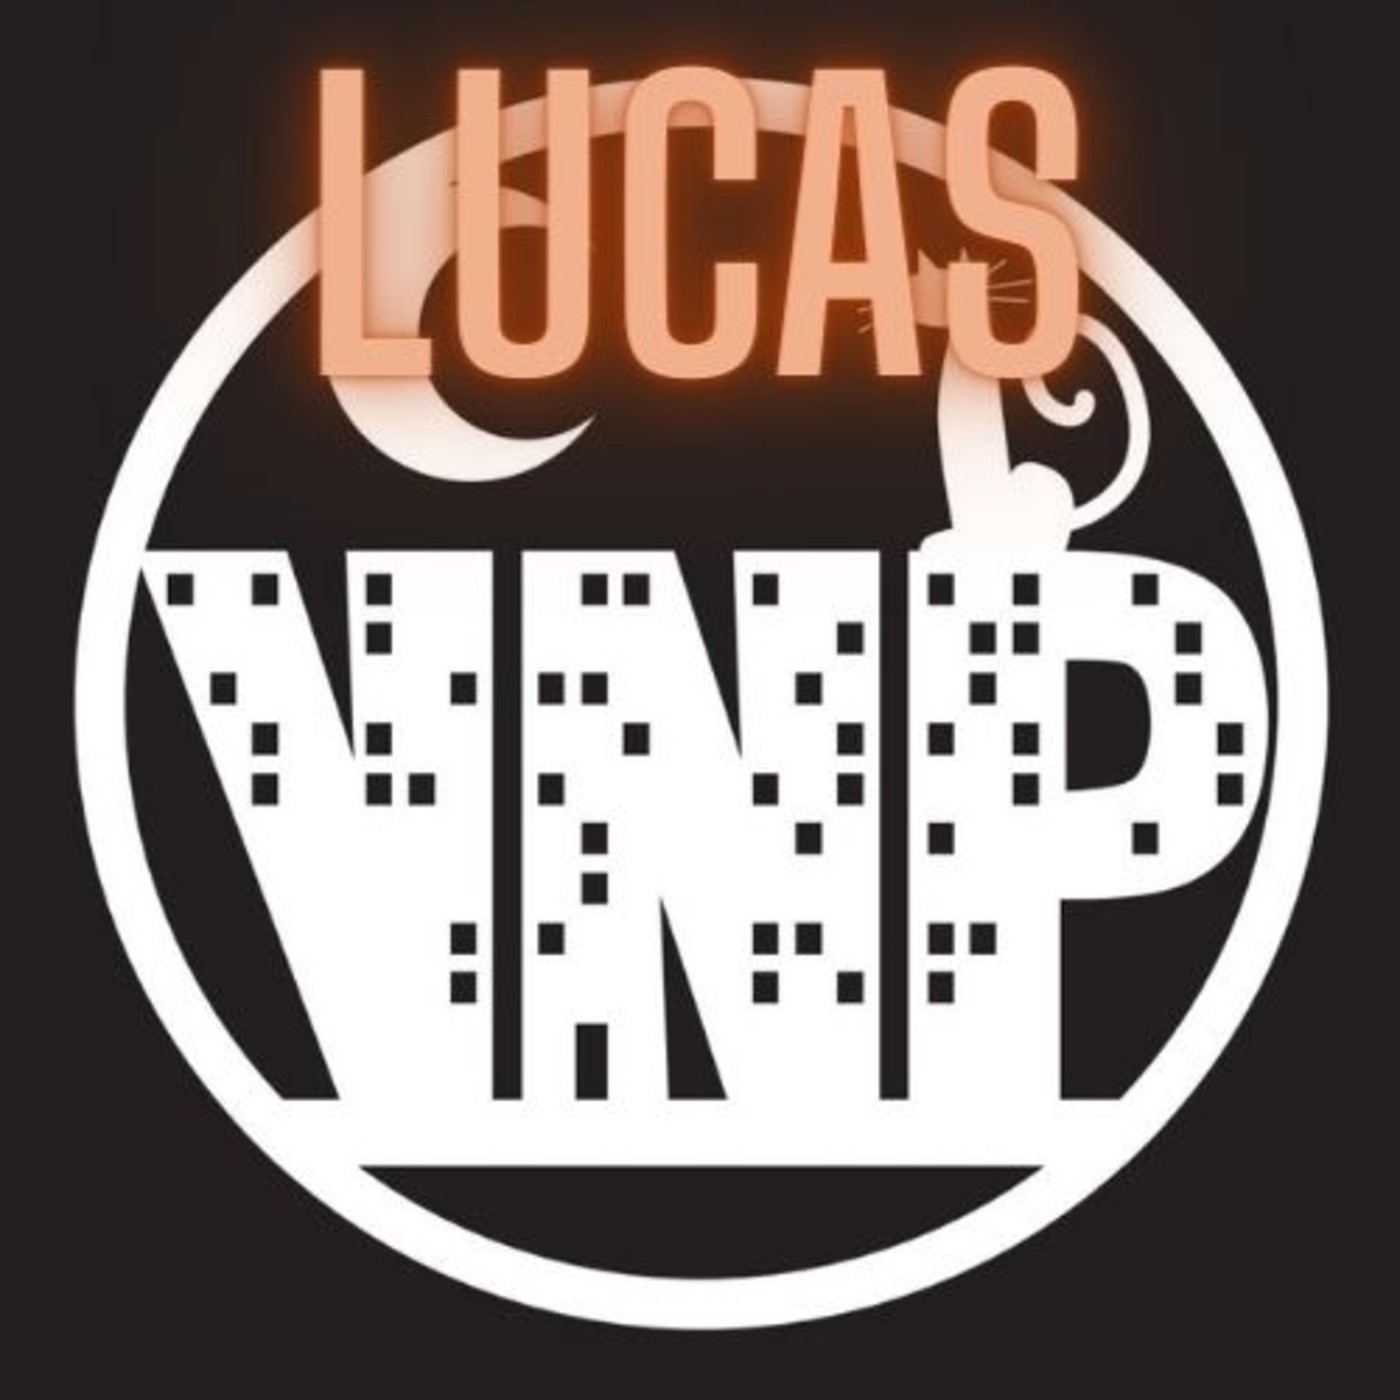 #14 Lucas (Voces Nocturnas)